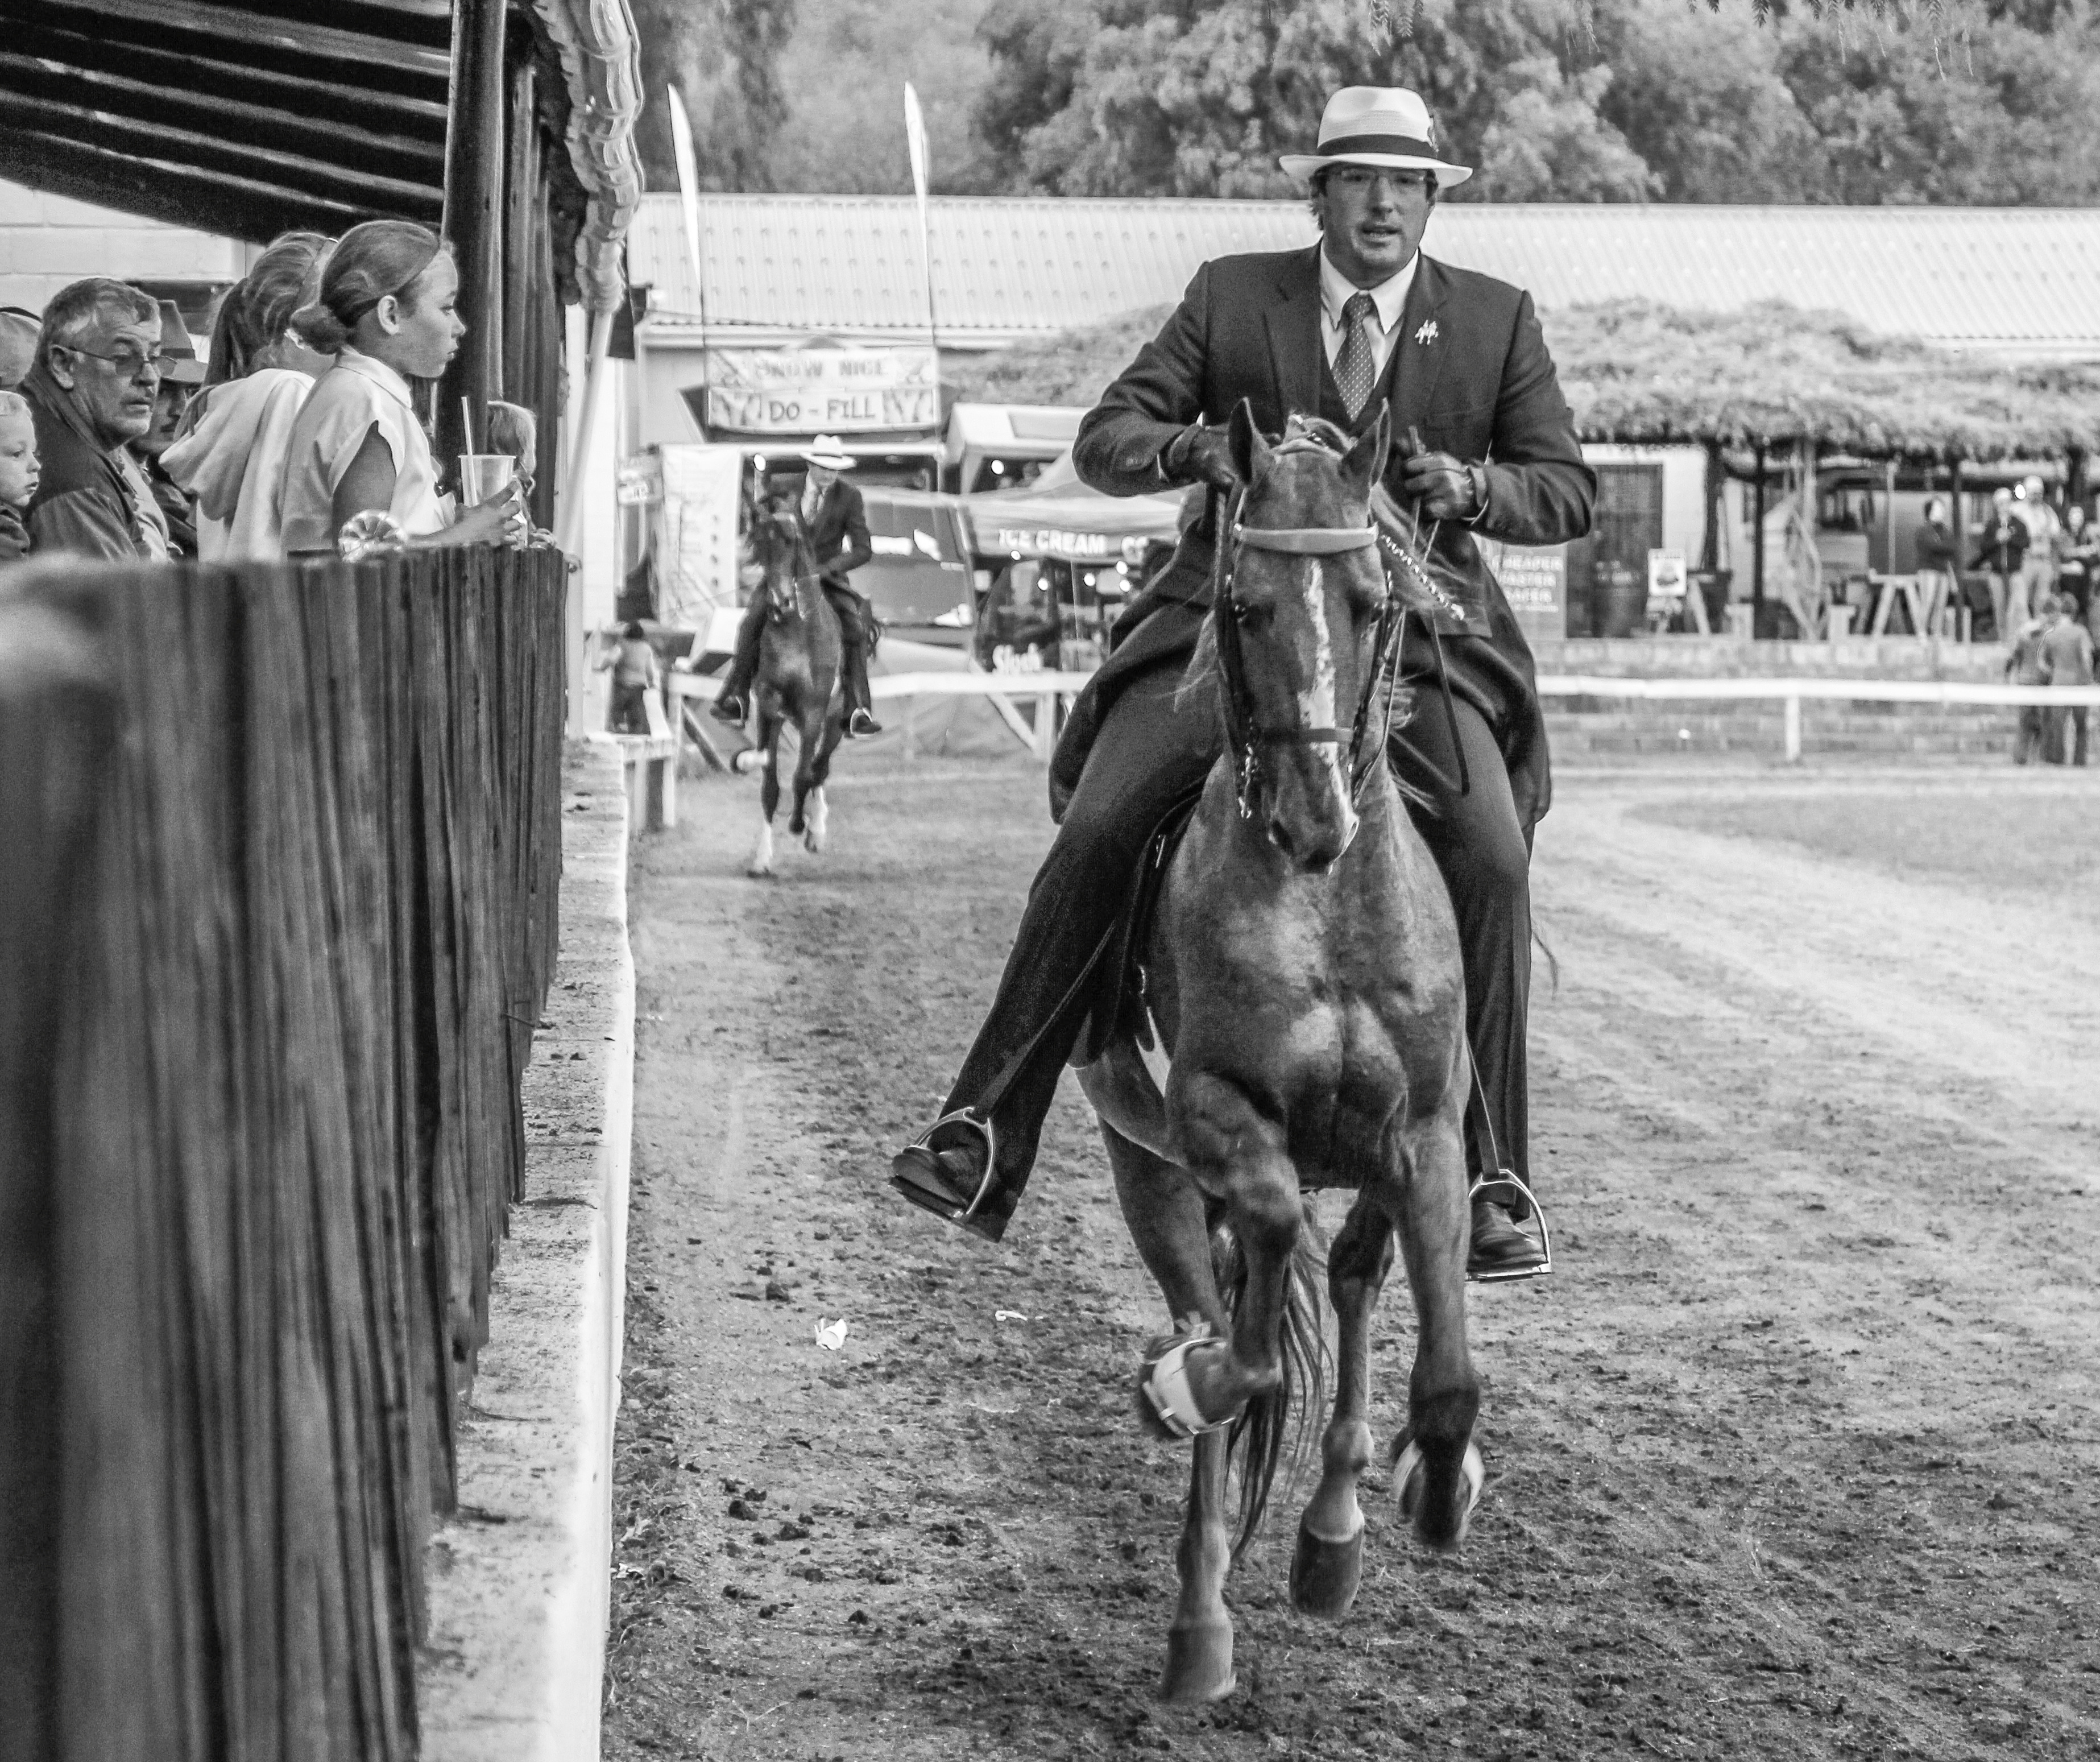 Expert horsemanship on display at the Cradock Agricultural Show. Photograph by Chris Marais.